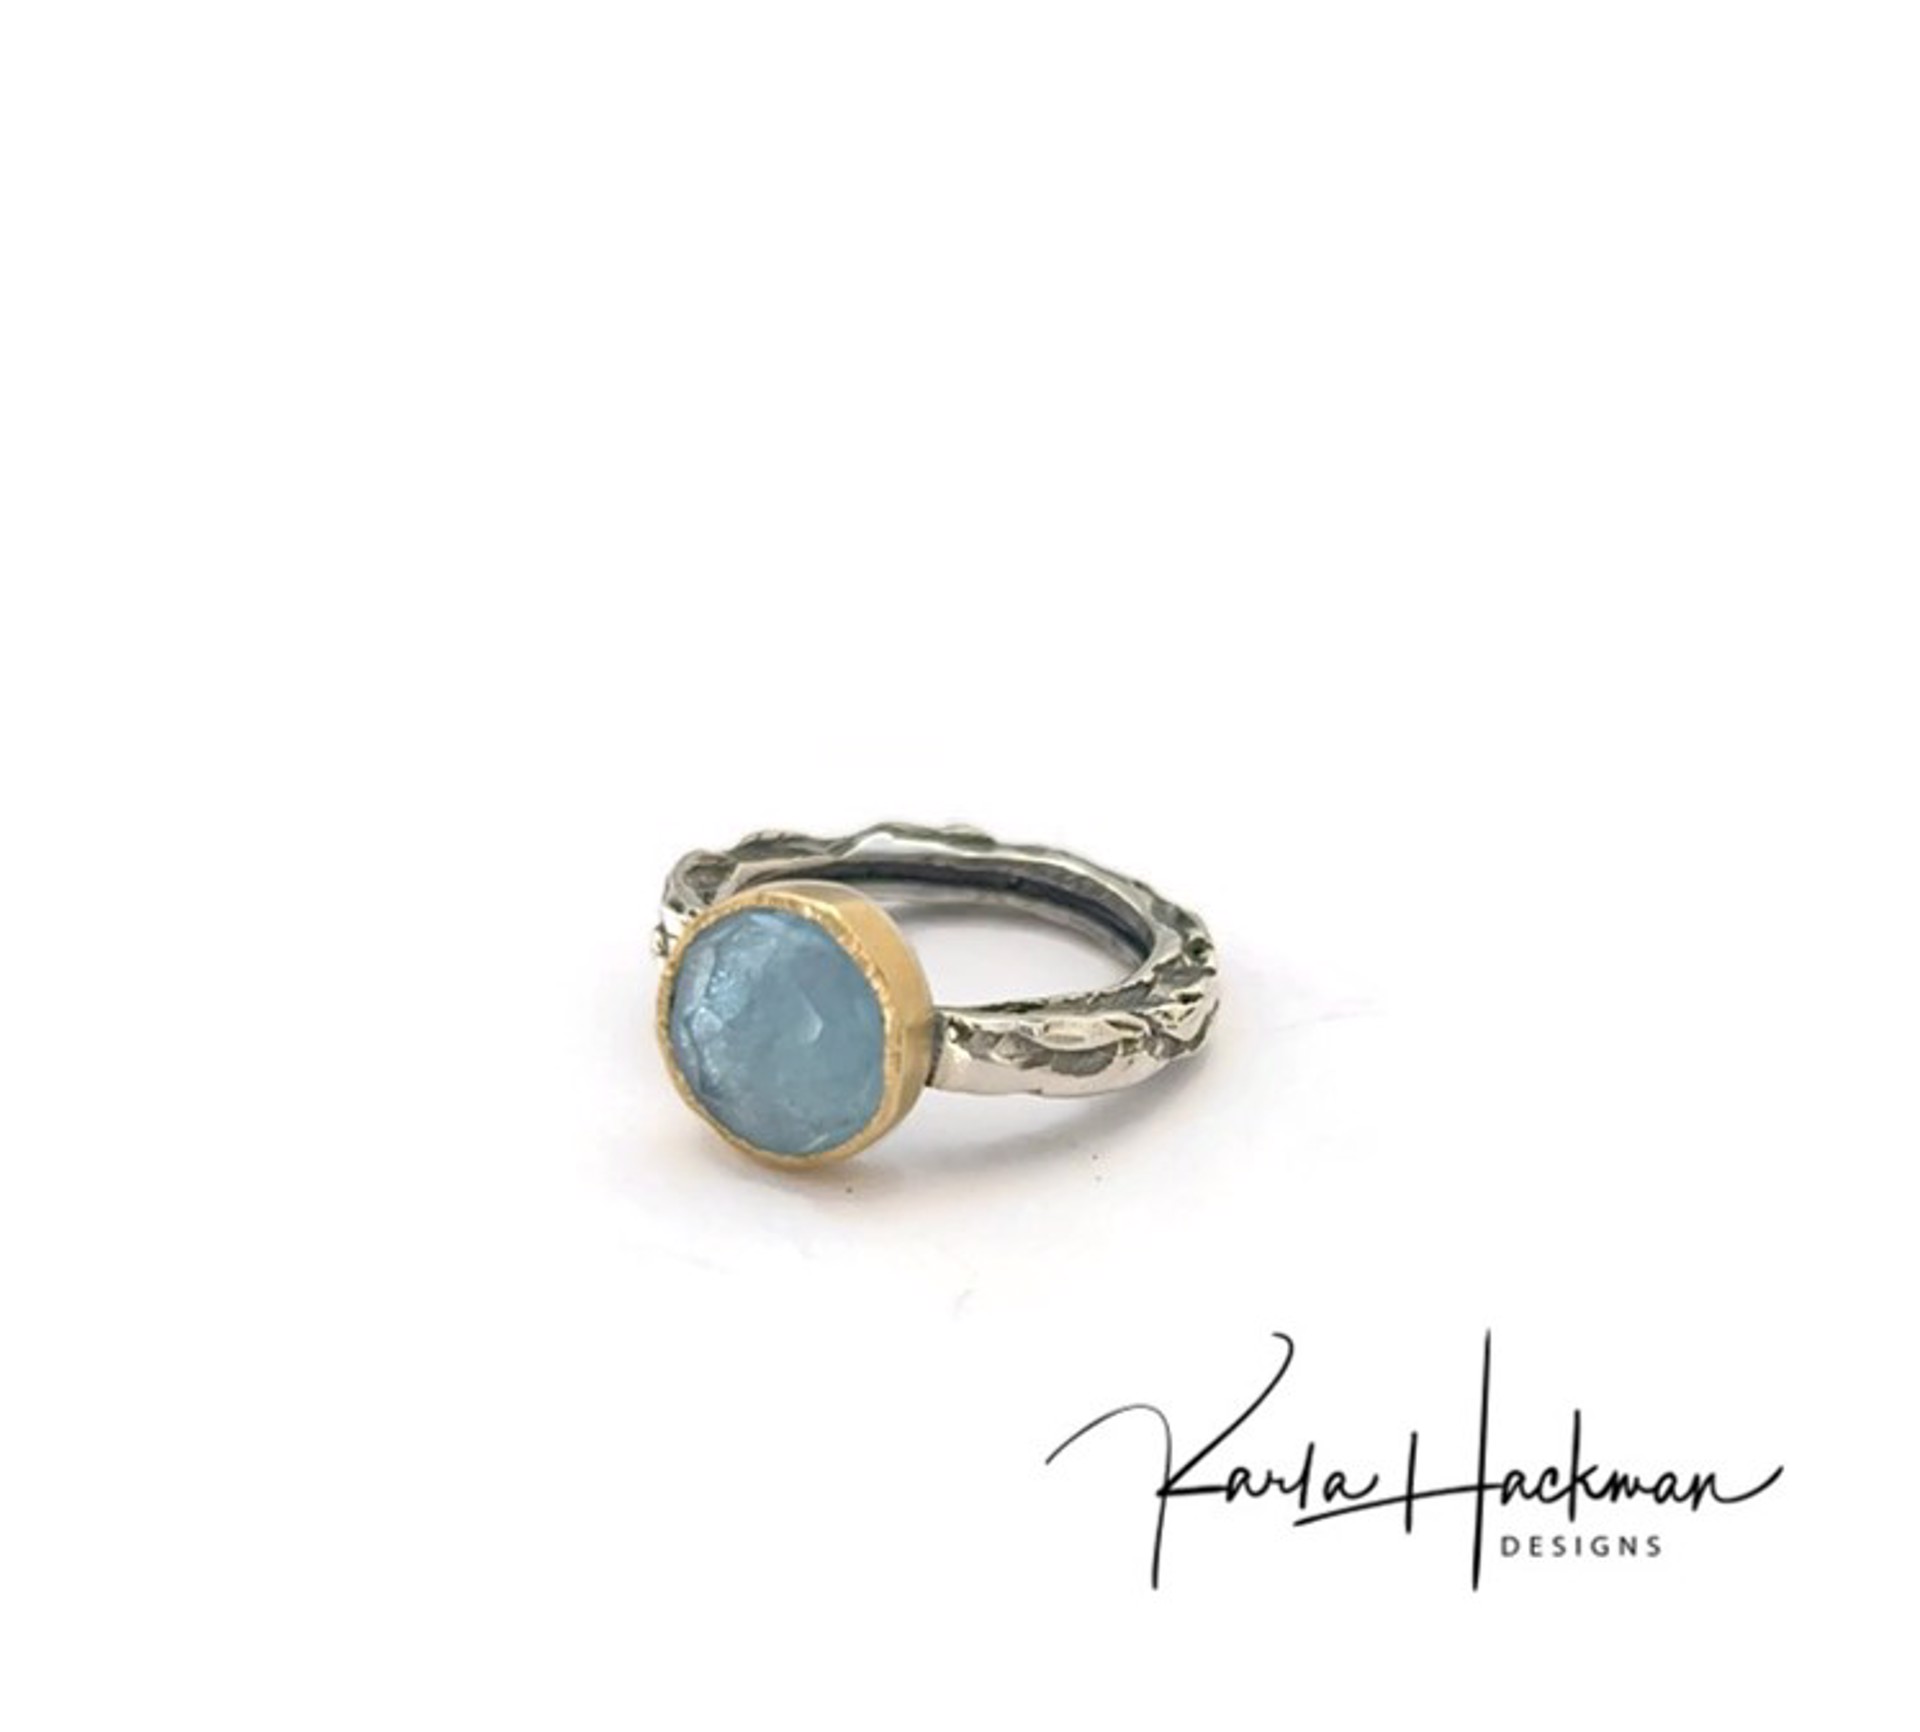 Aquamarine Ring by Karla Hackman